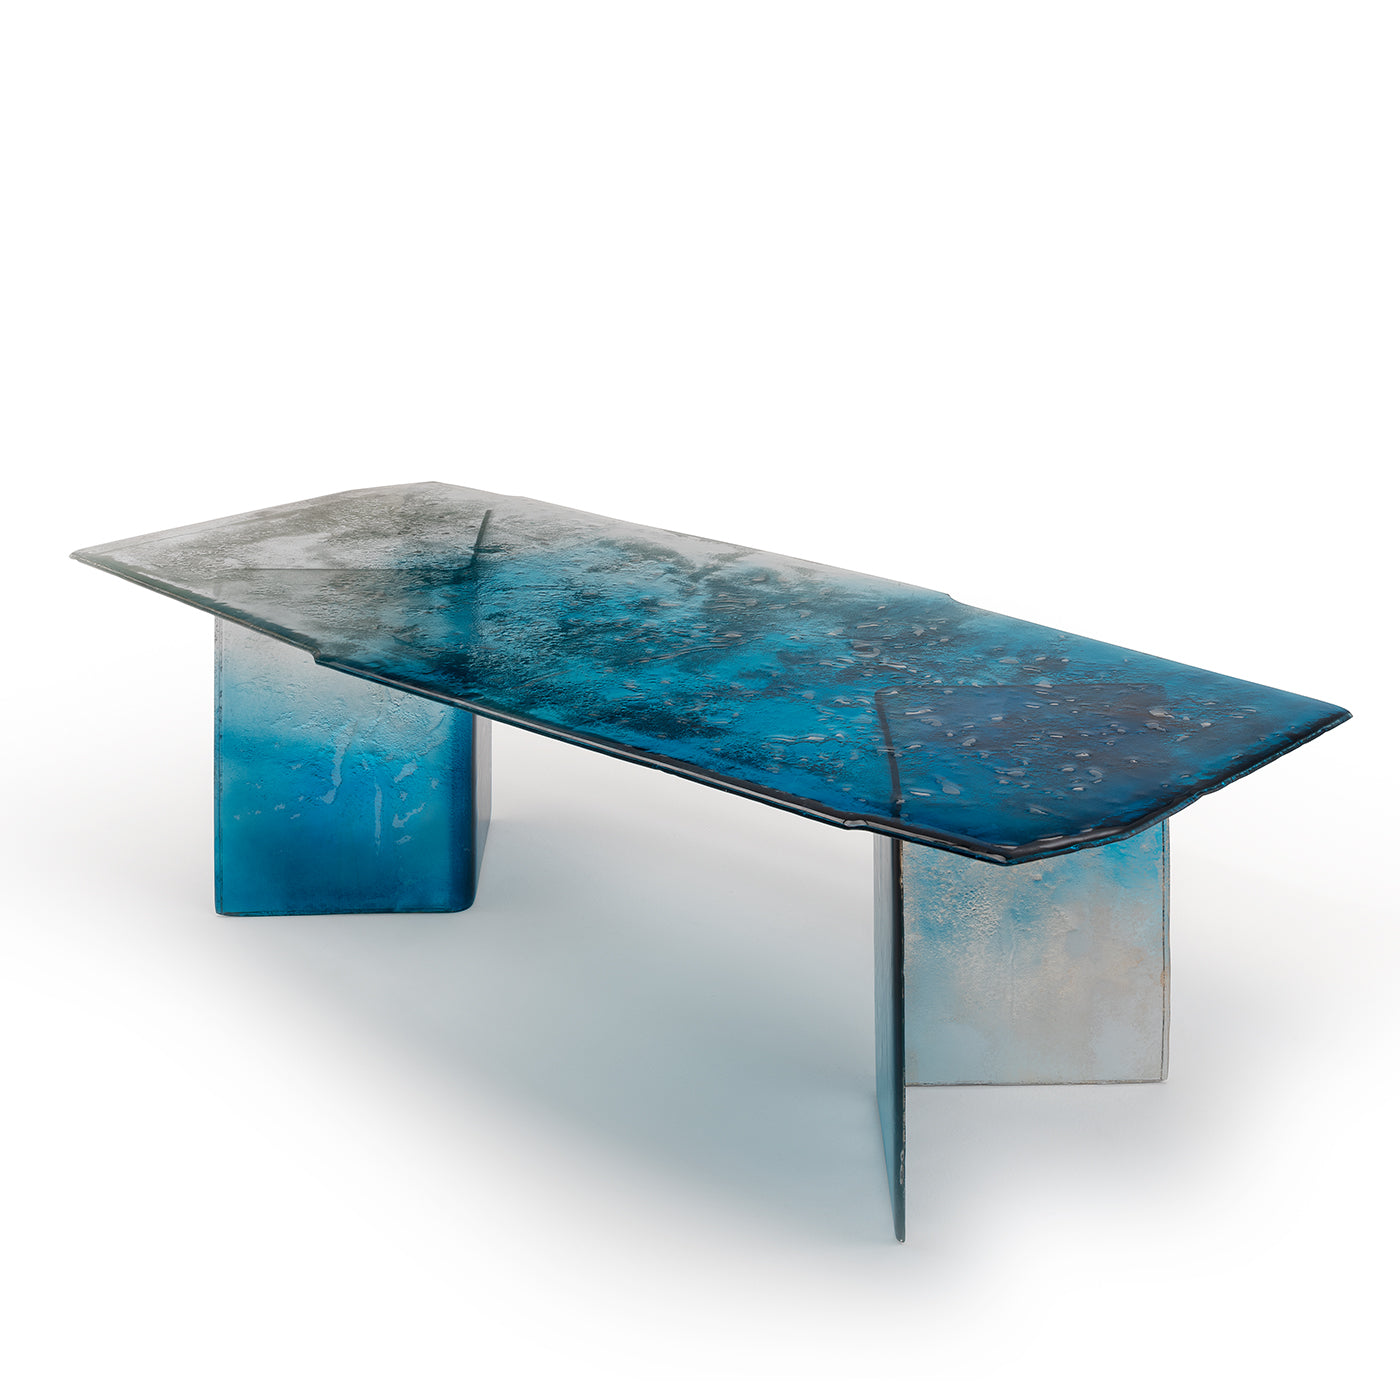 Bisatob Table By Leo De Carlo - Alternative view 2